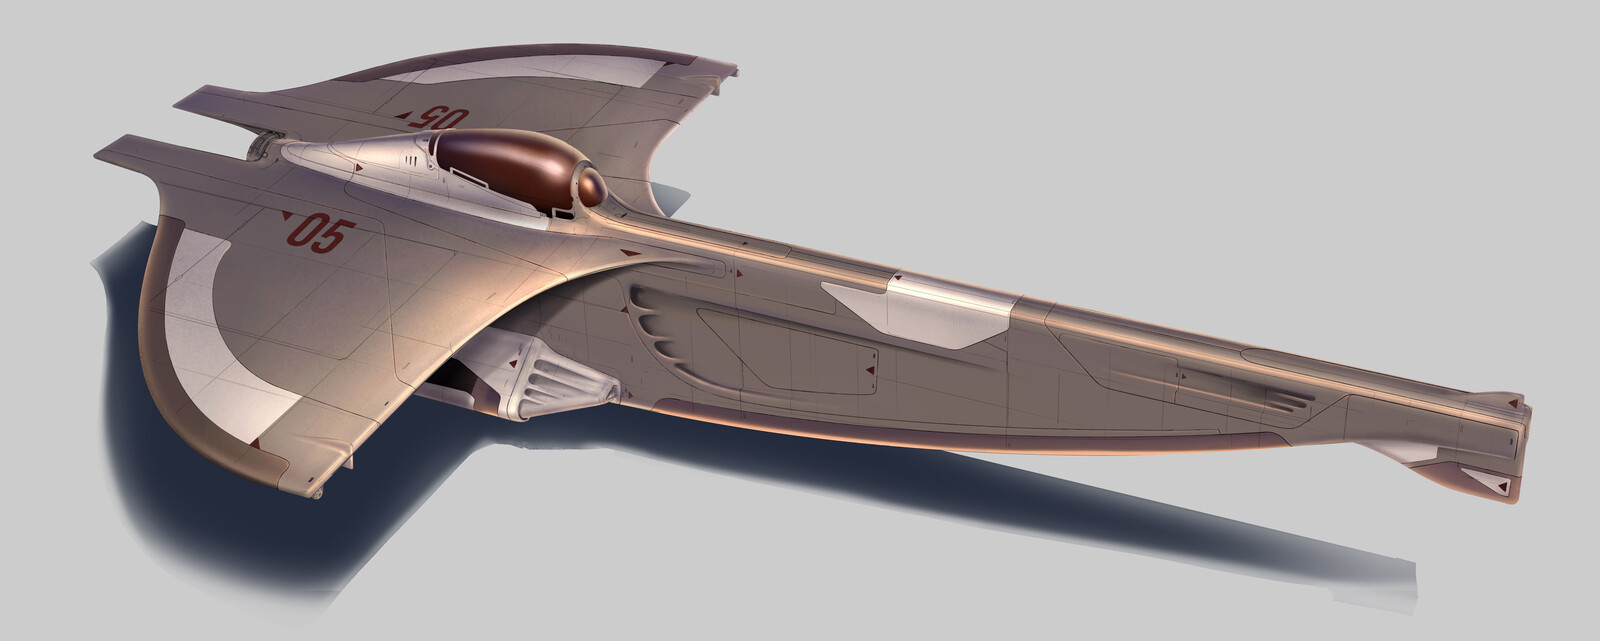 Vehicle design - Spaceship